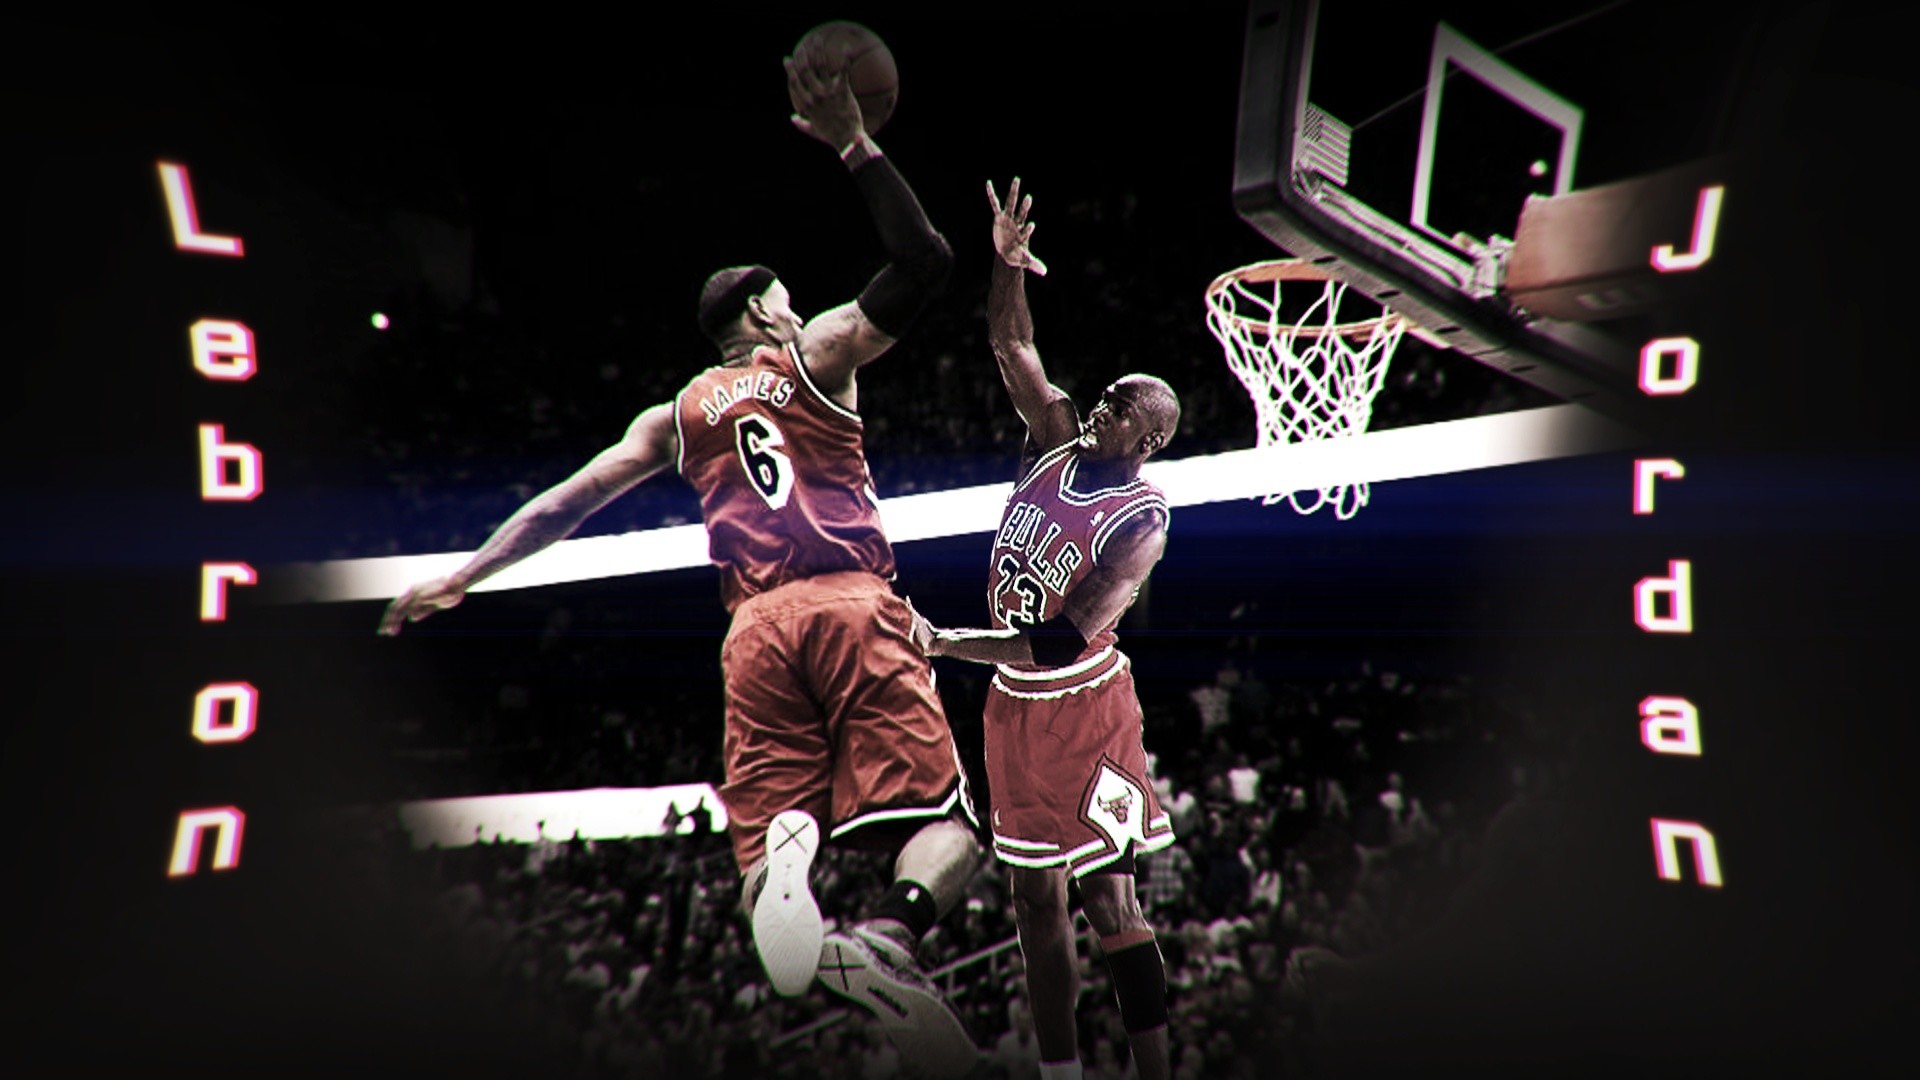 Michael Jordan Live Wallpaper (67+ images)1920 x 1080